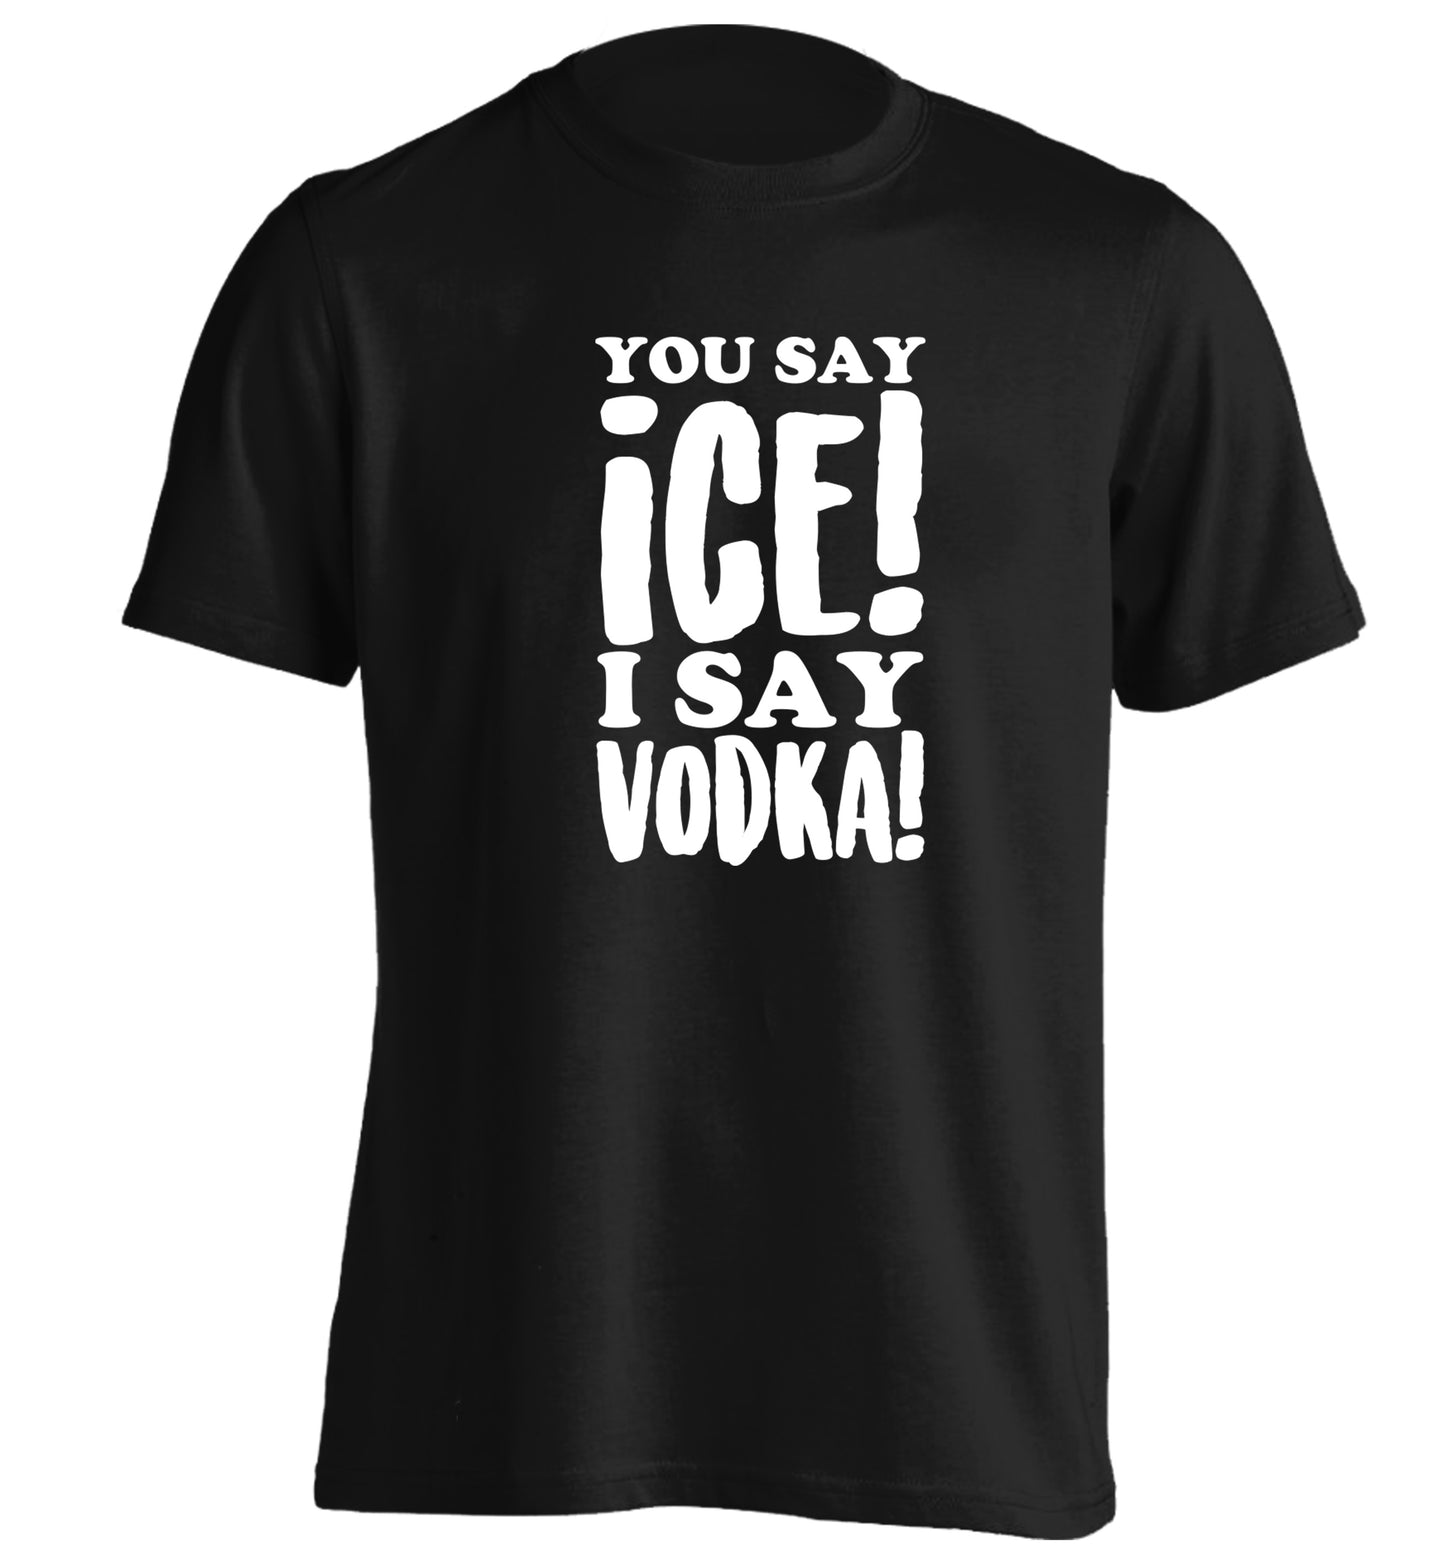 You say ice I say vodka! adults unisex black Tshirt 2XL